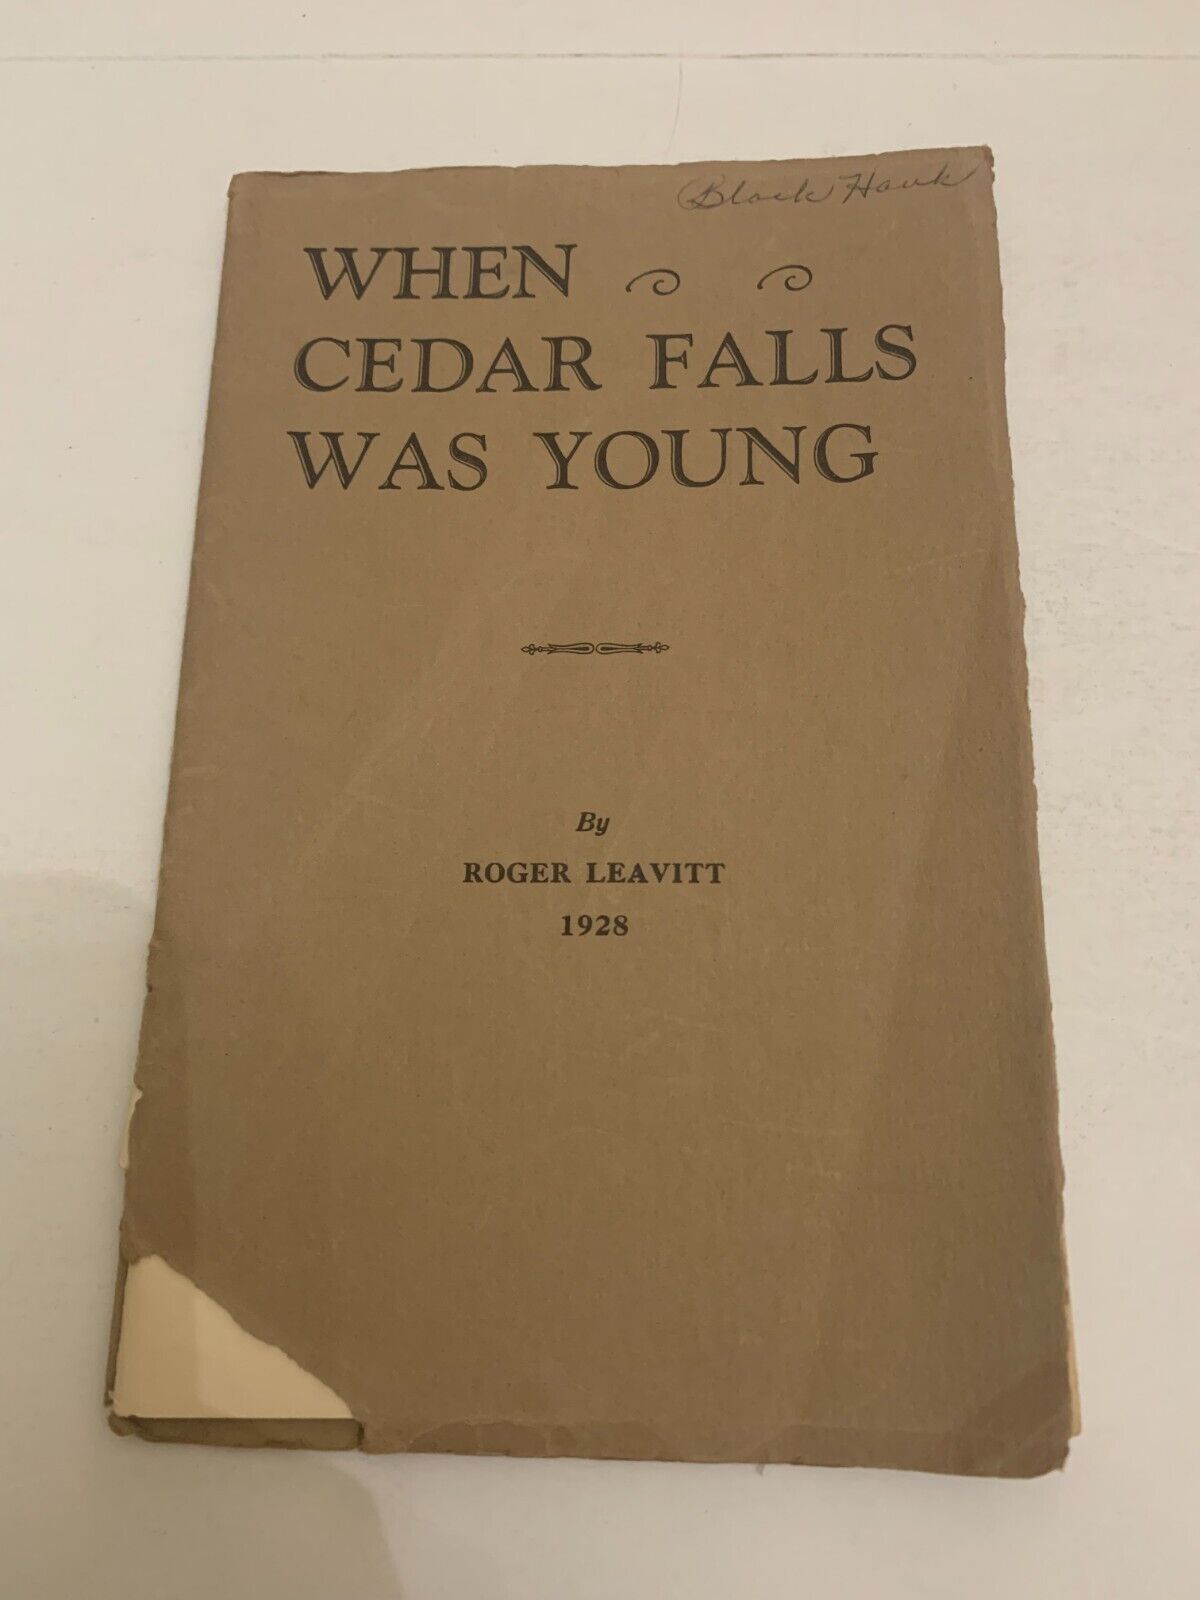 1928 When Cedar Falls Iowa Was Young by Roger Leavitt Booklet